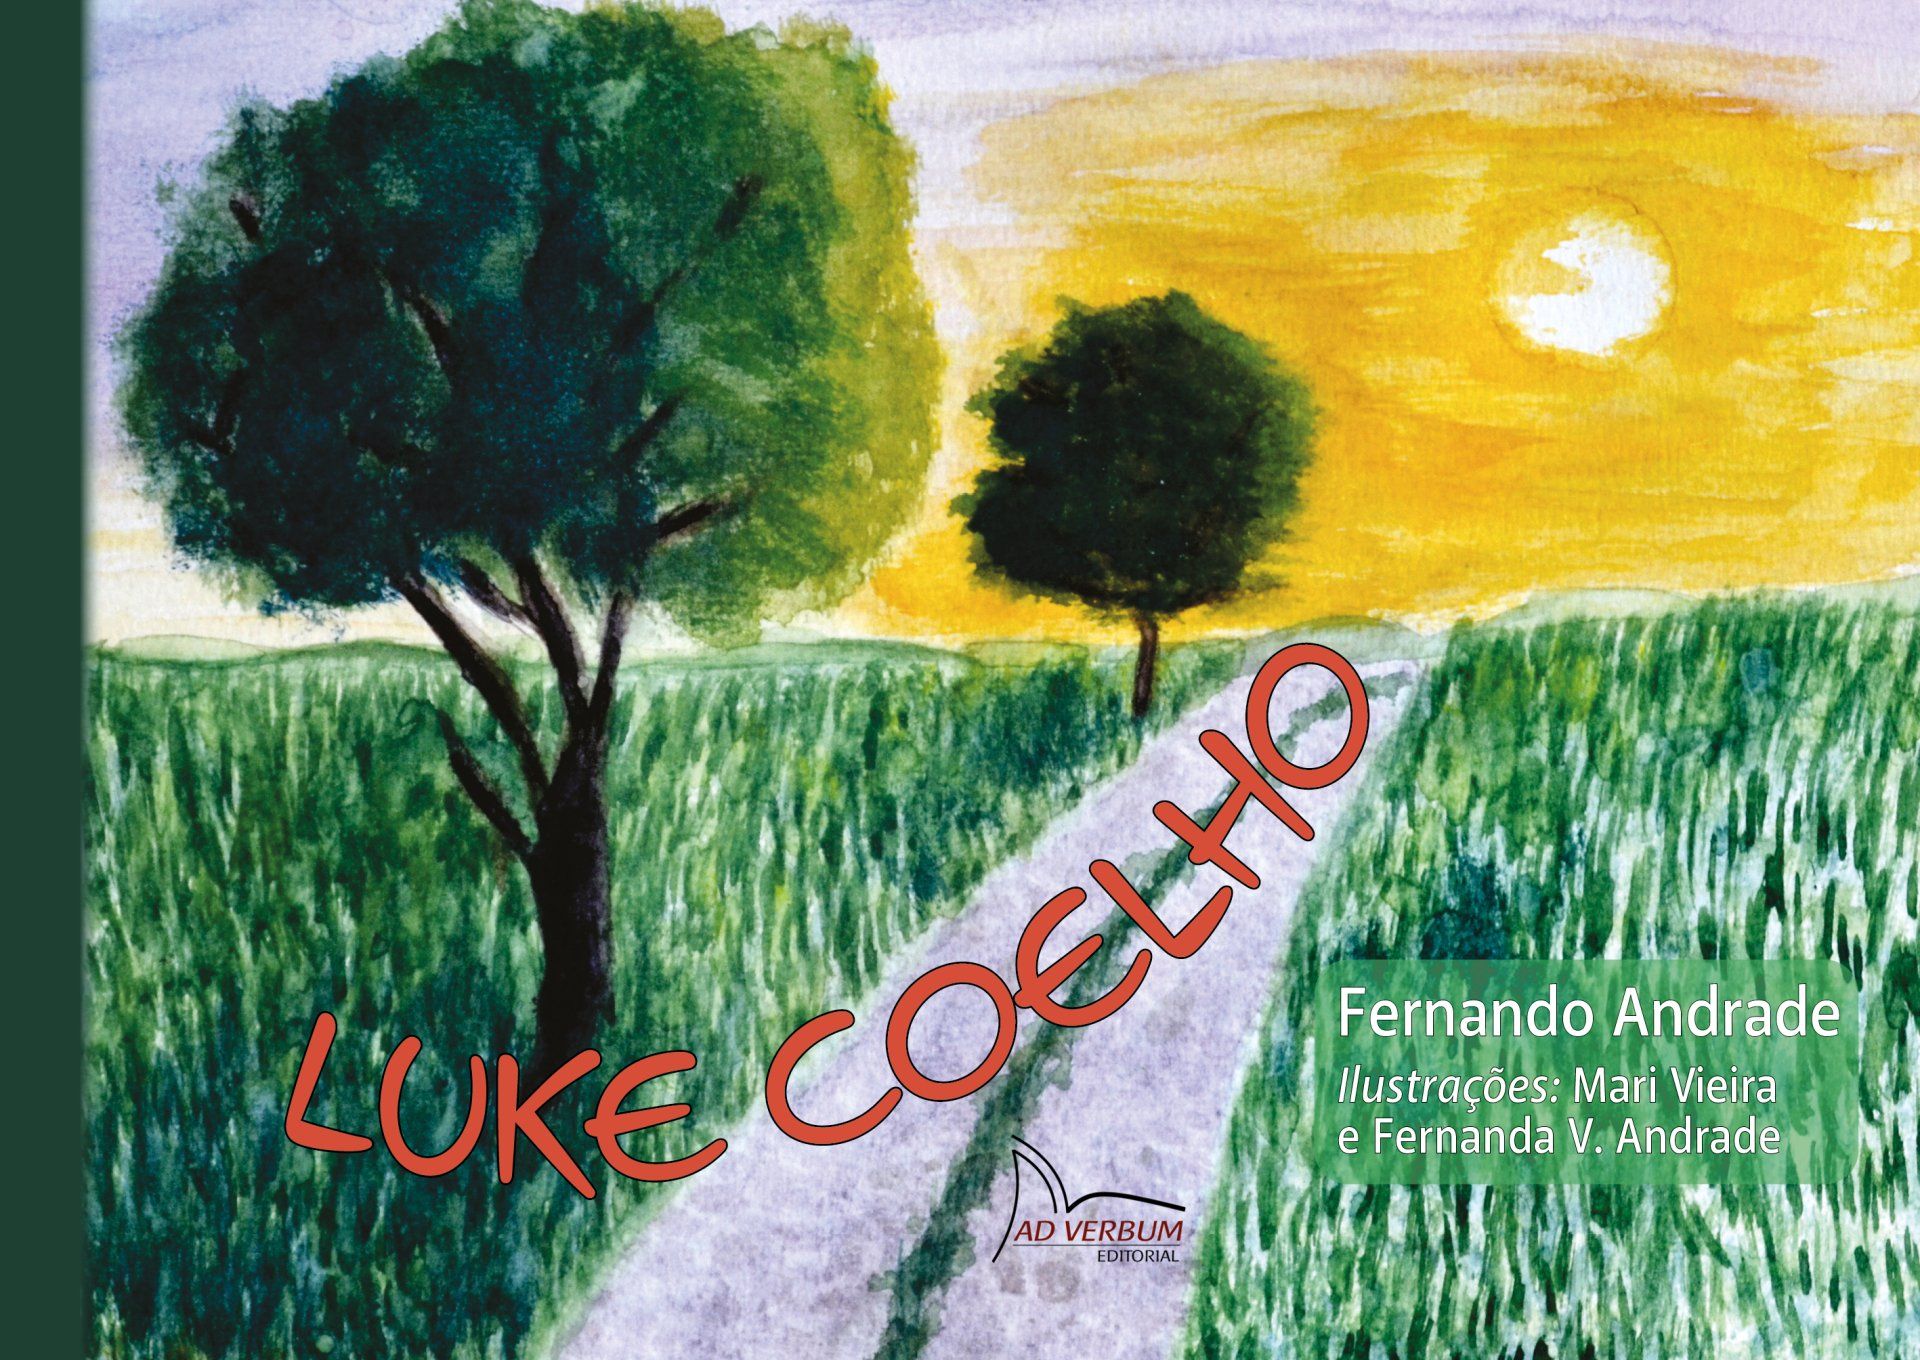 LUKE COELHO - Fernando Andrade